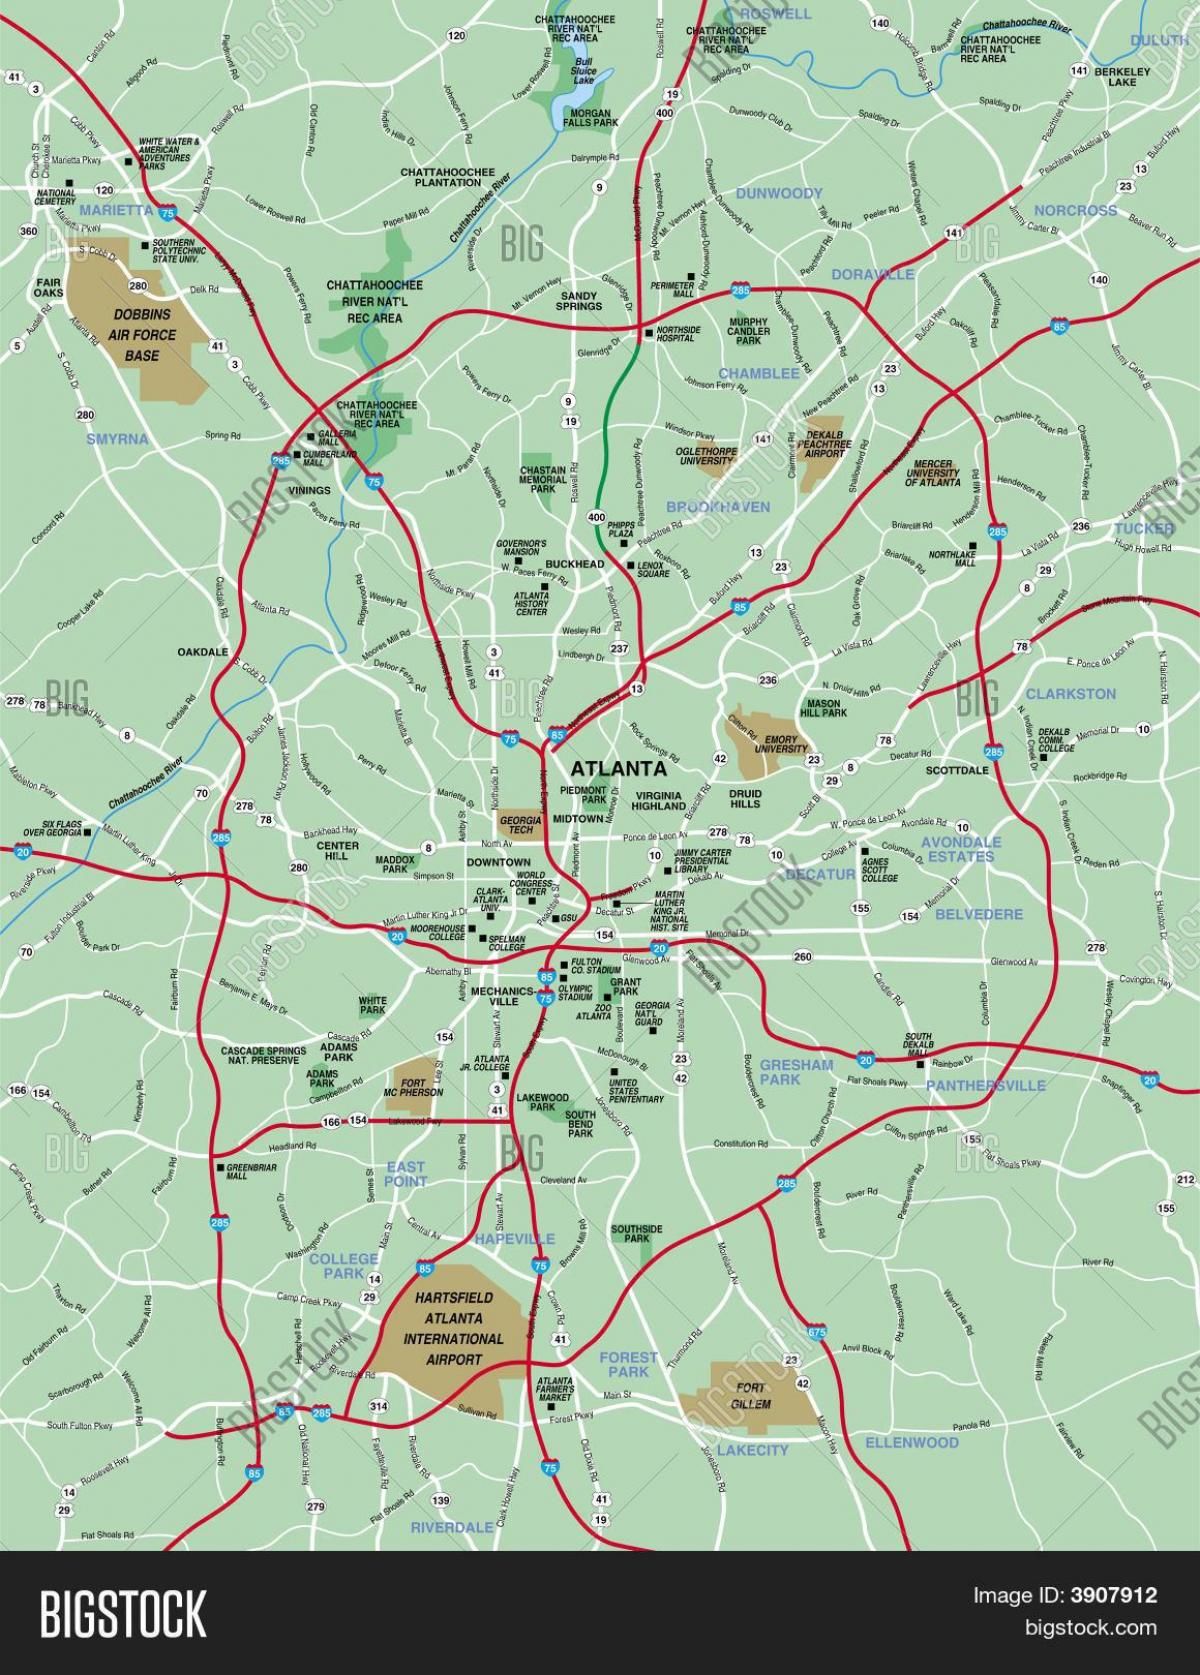 greater Atlanta area map